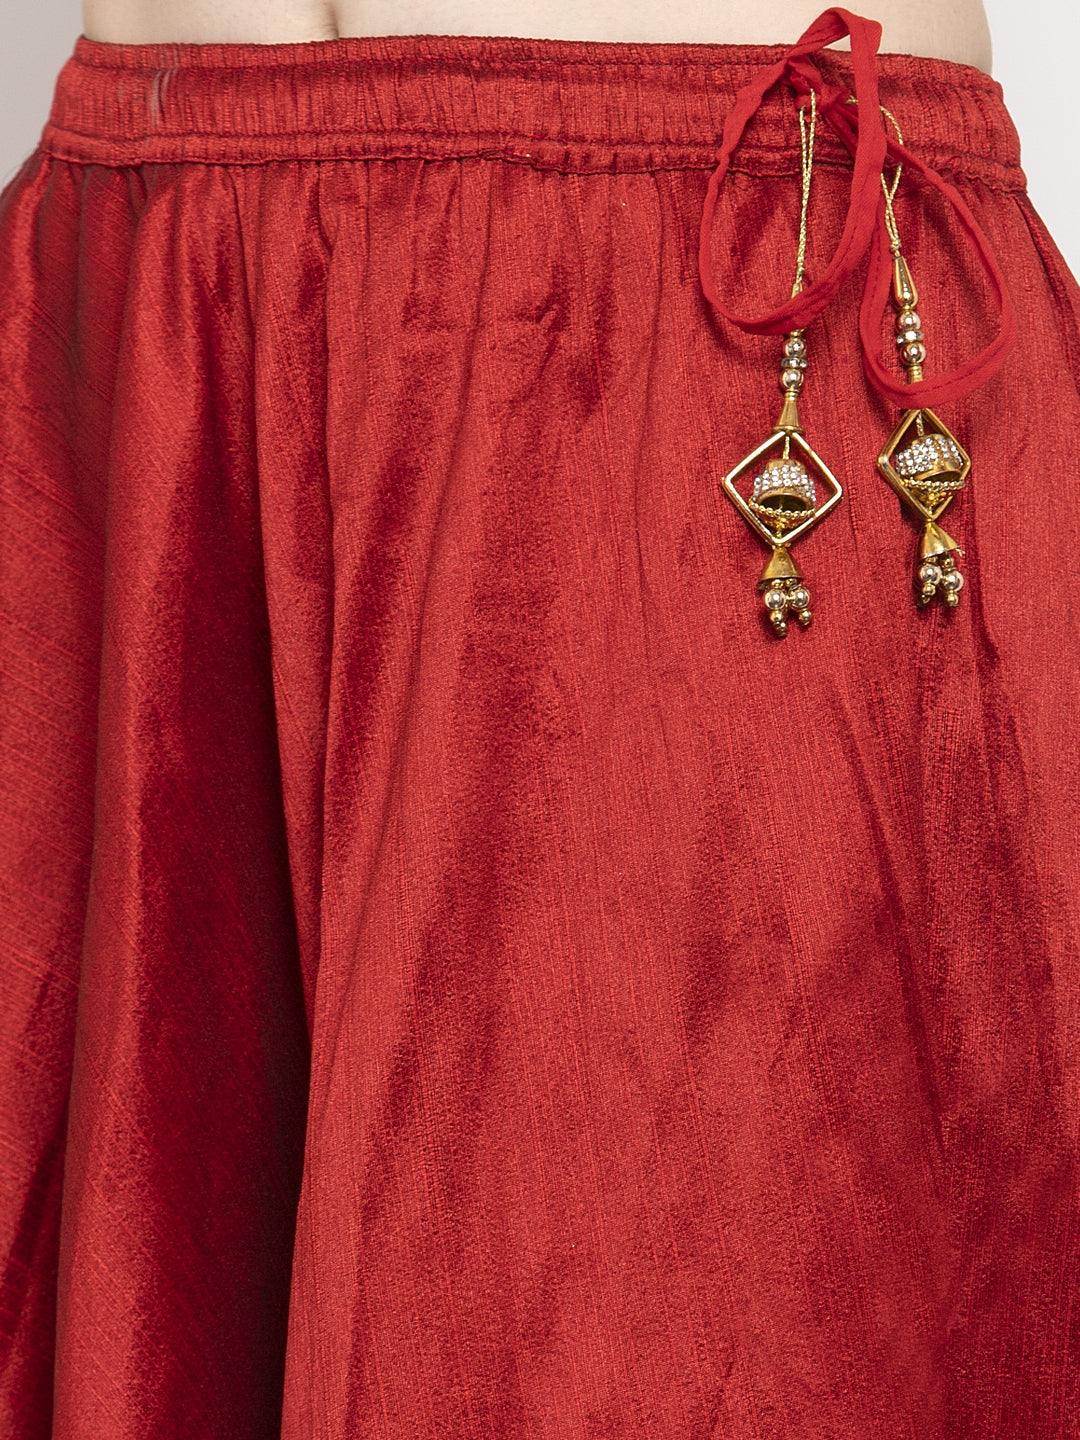 Women's Maroon Flared Embellished Skirt - Wahe-NOOR